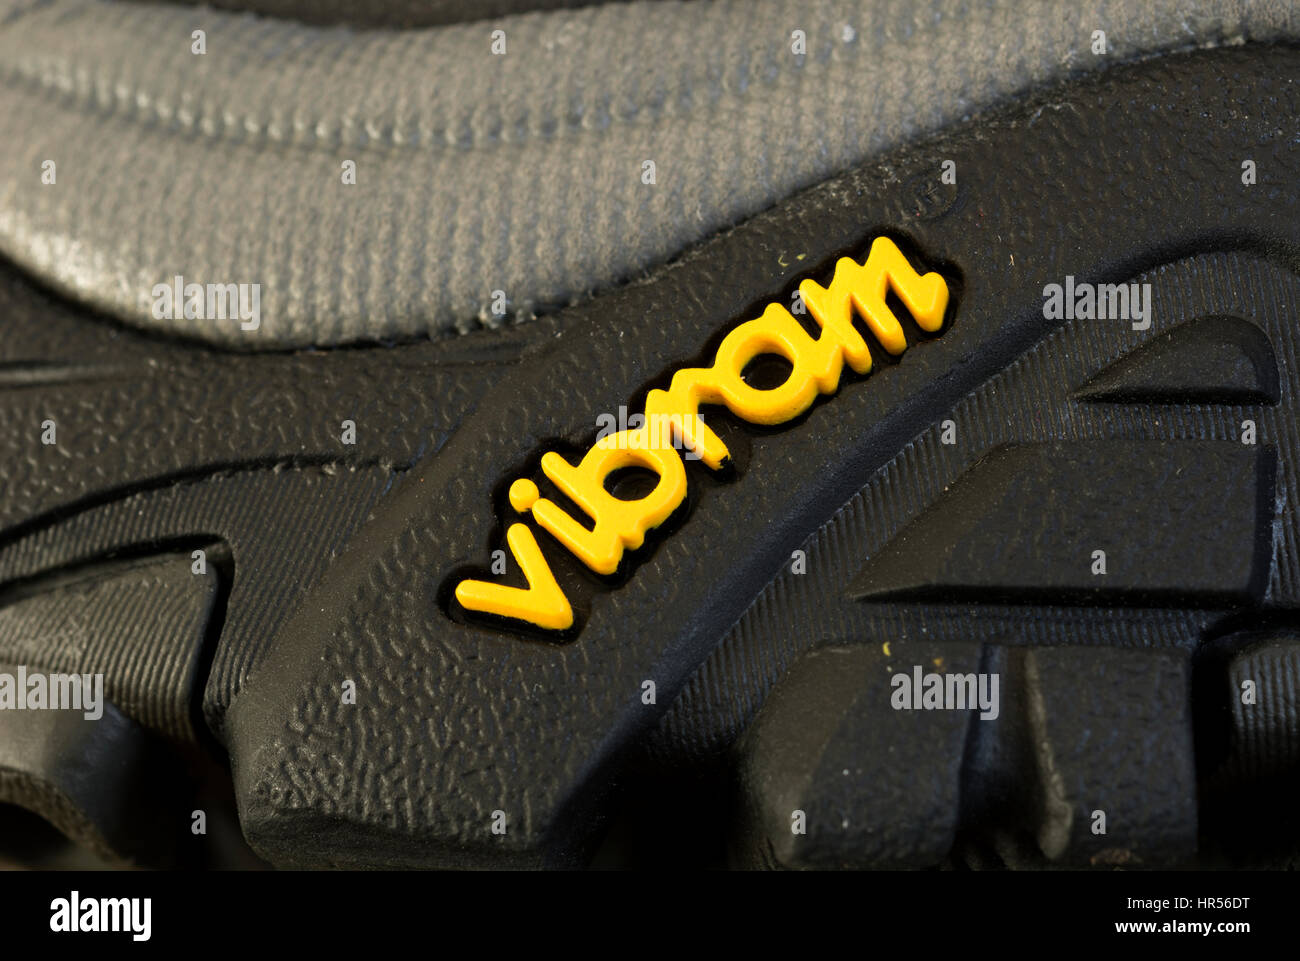 Vibram label on a Merrell walking shoe 